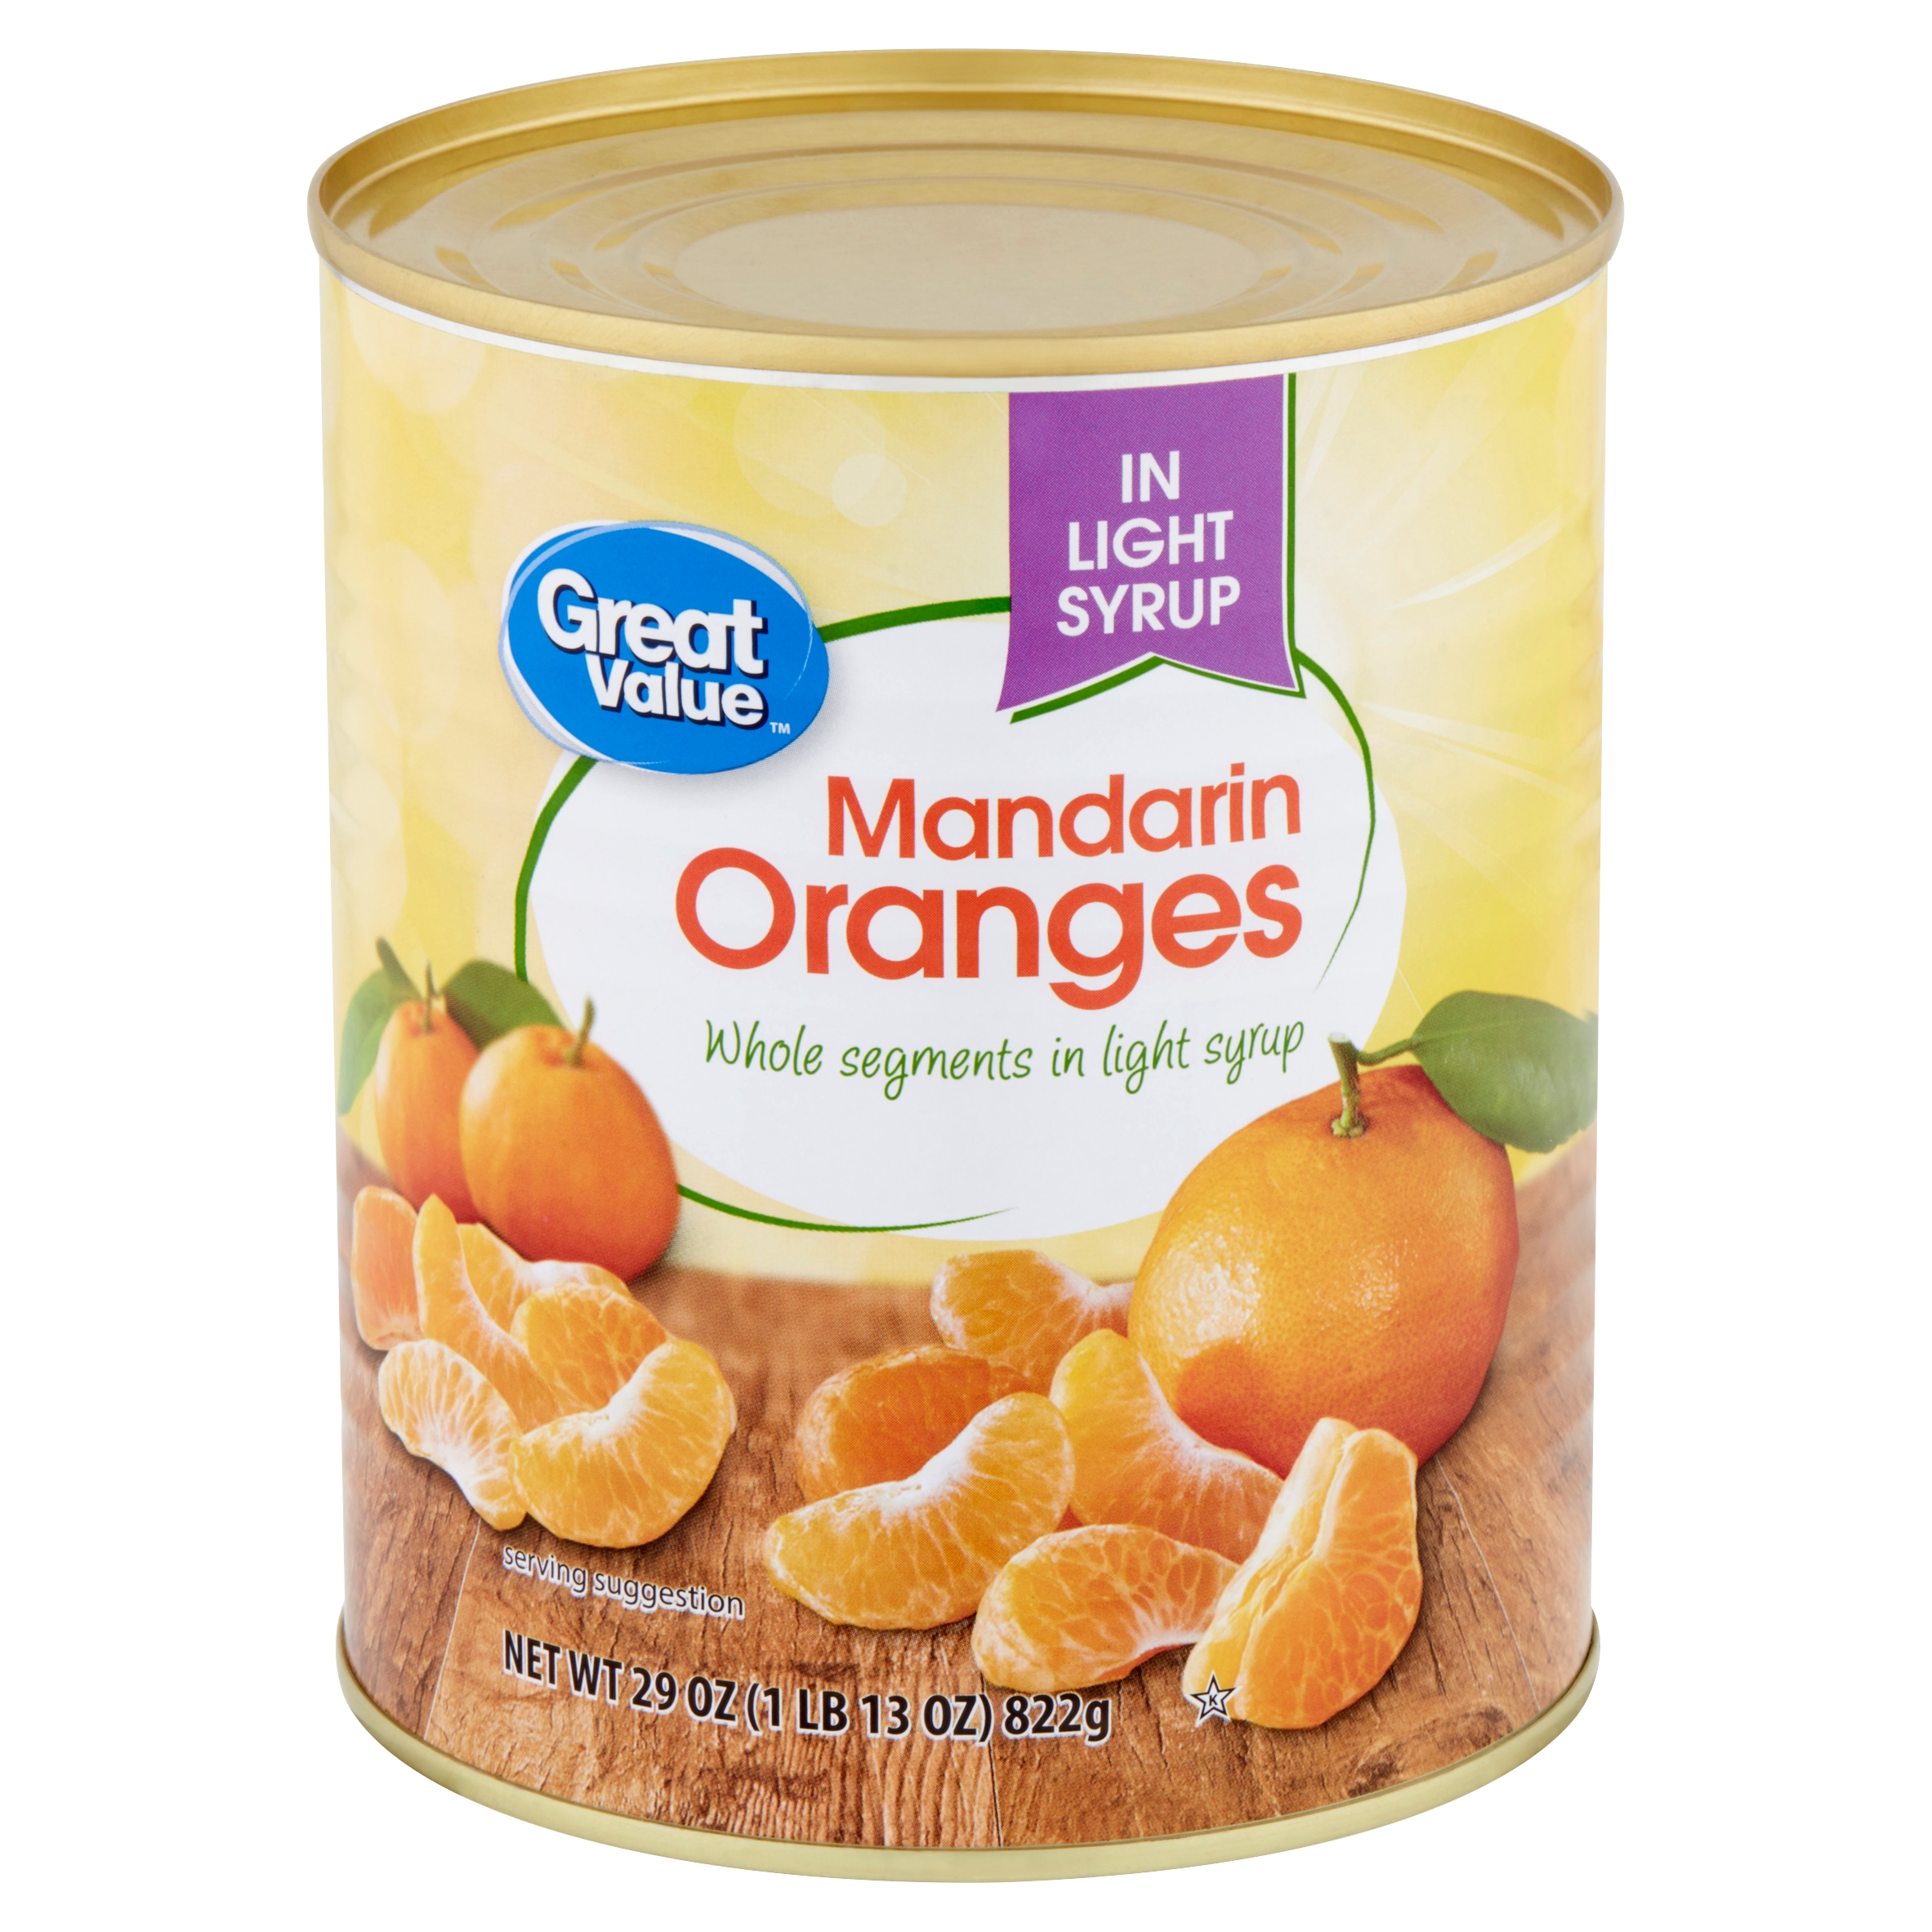 Great Value Mandarin Oranges in Light Syrup, 29 Oz Image